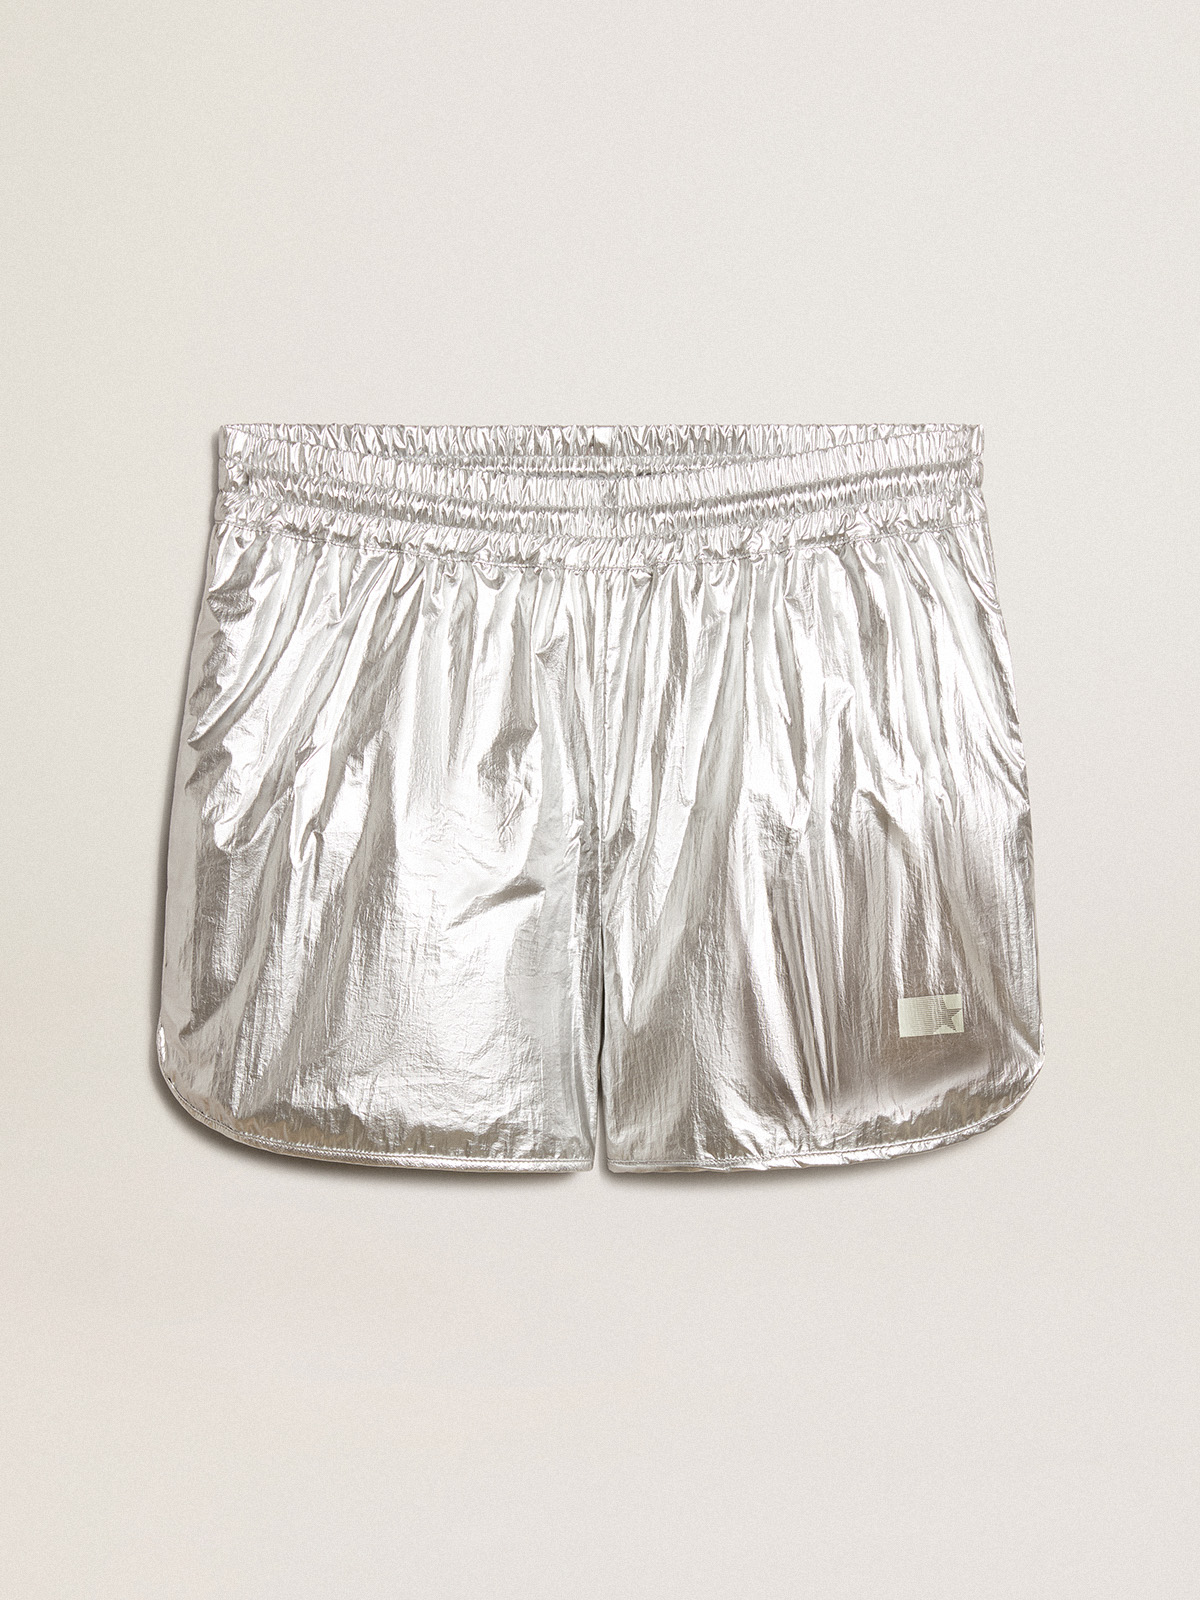 Men's running shorts in silver fabric